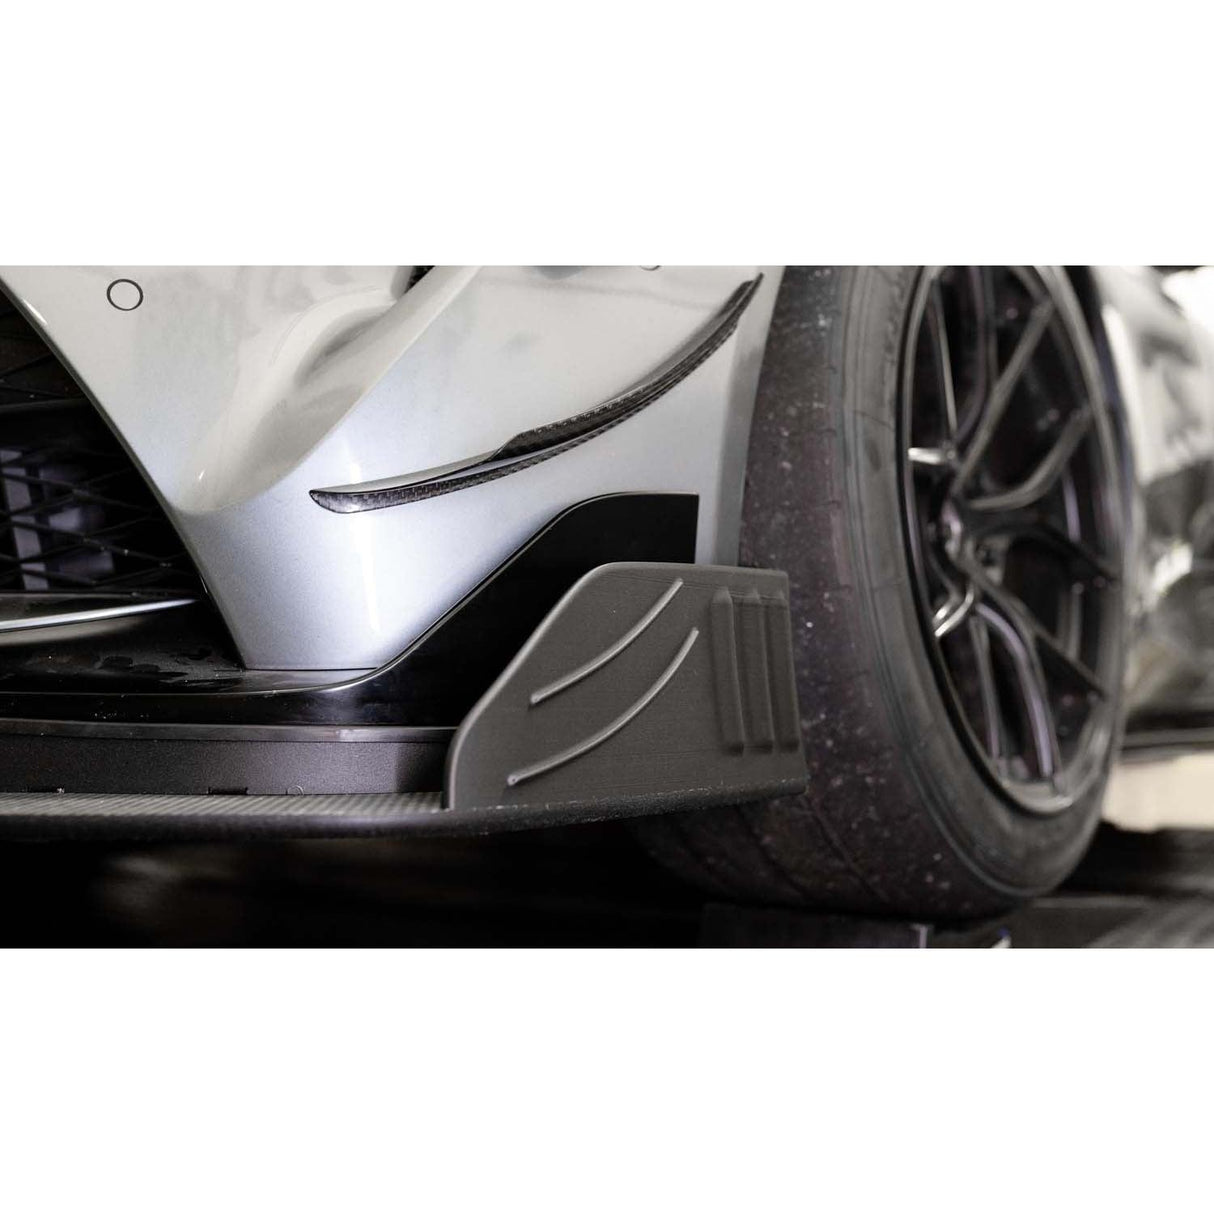 Front Splitter Endplate Kit, High Downforce - Toyota Supra - Verus Engineering